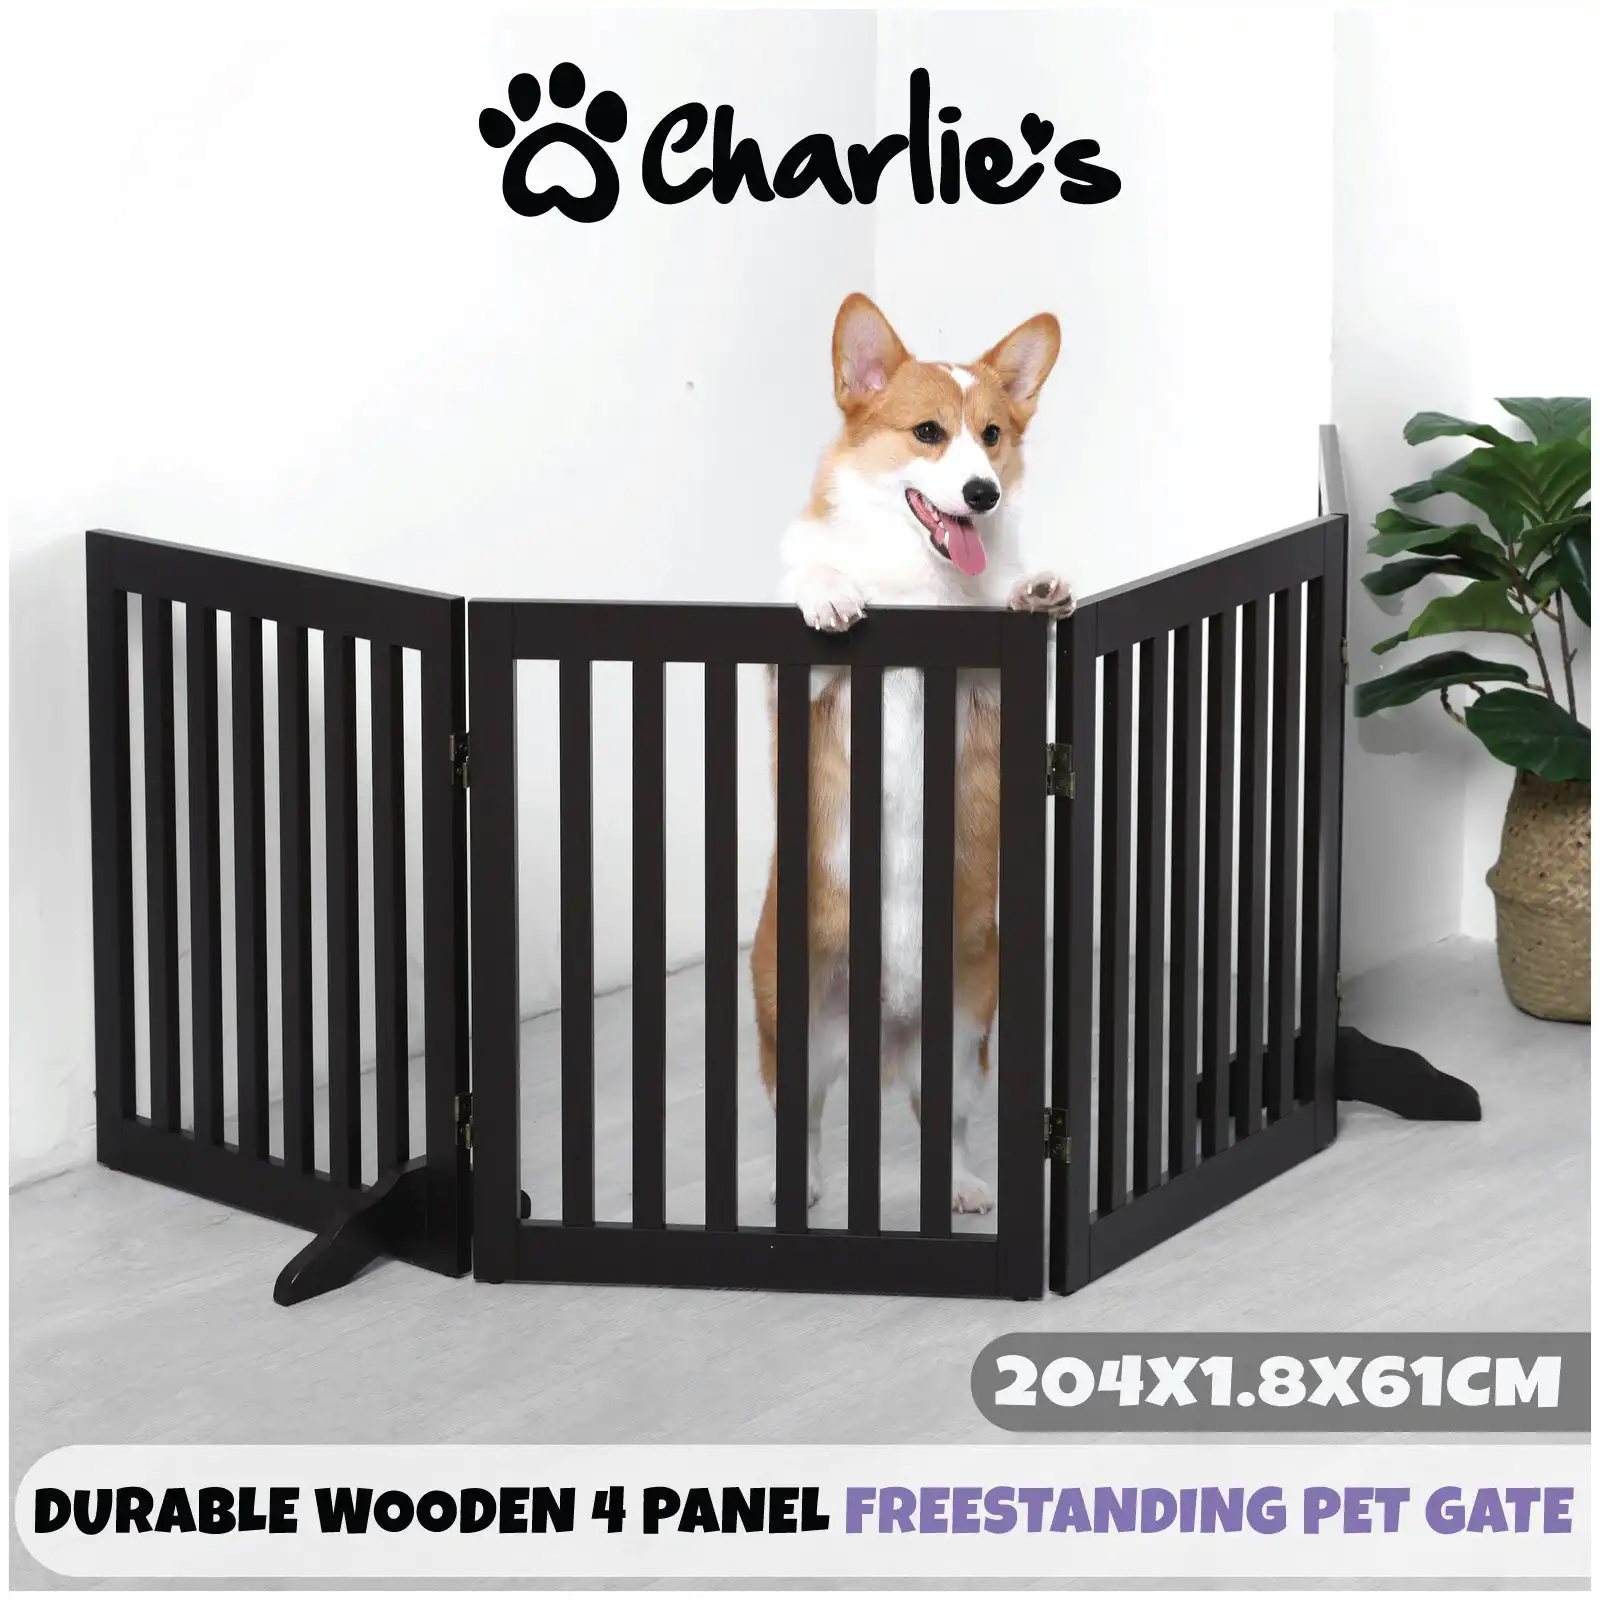 Charlie's Wooden 4 Panel Freestanding Dog Gate Brown